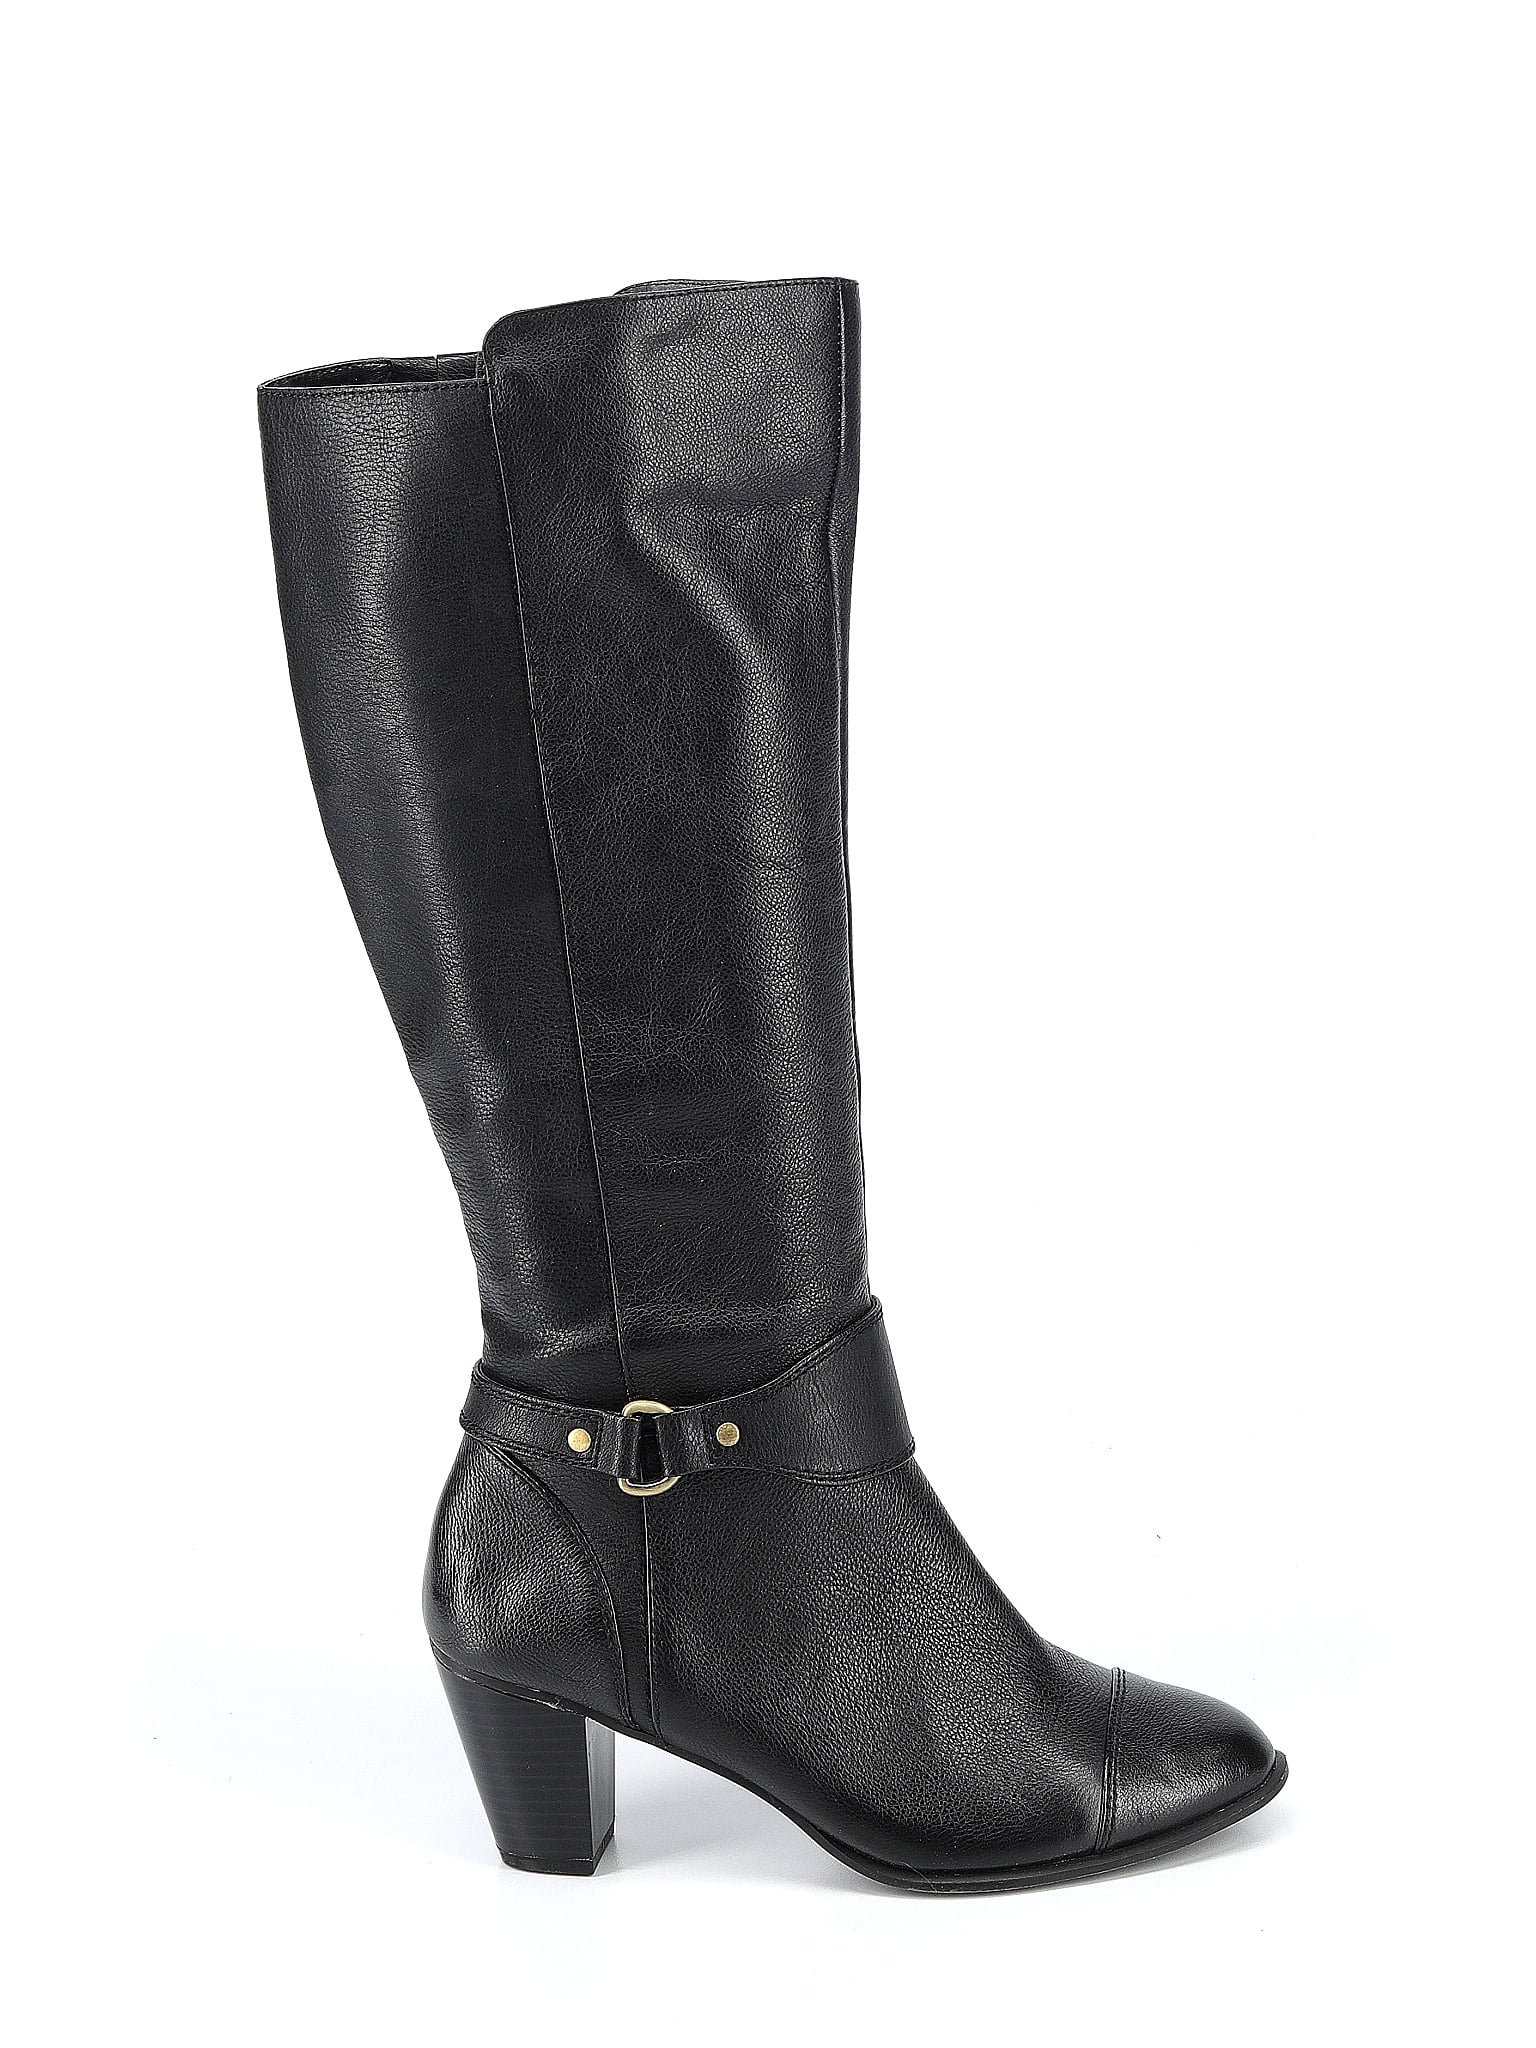 Giani Bernini Solid Black Boots Size 8 1/2 - 67% off | thredUP